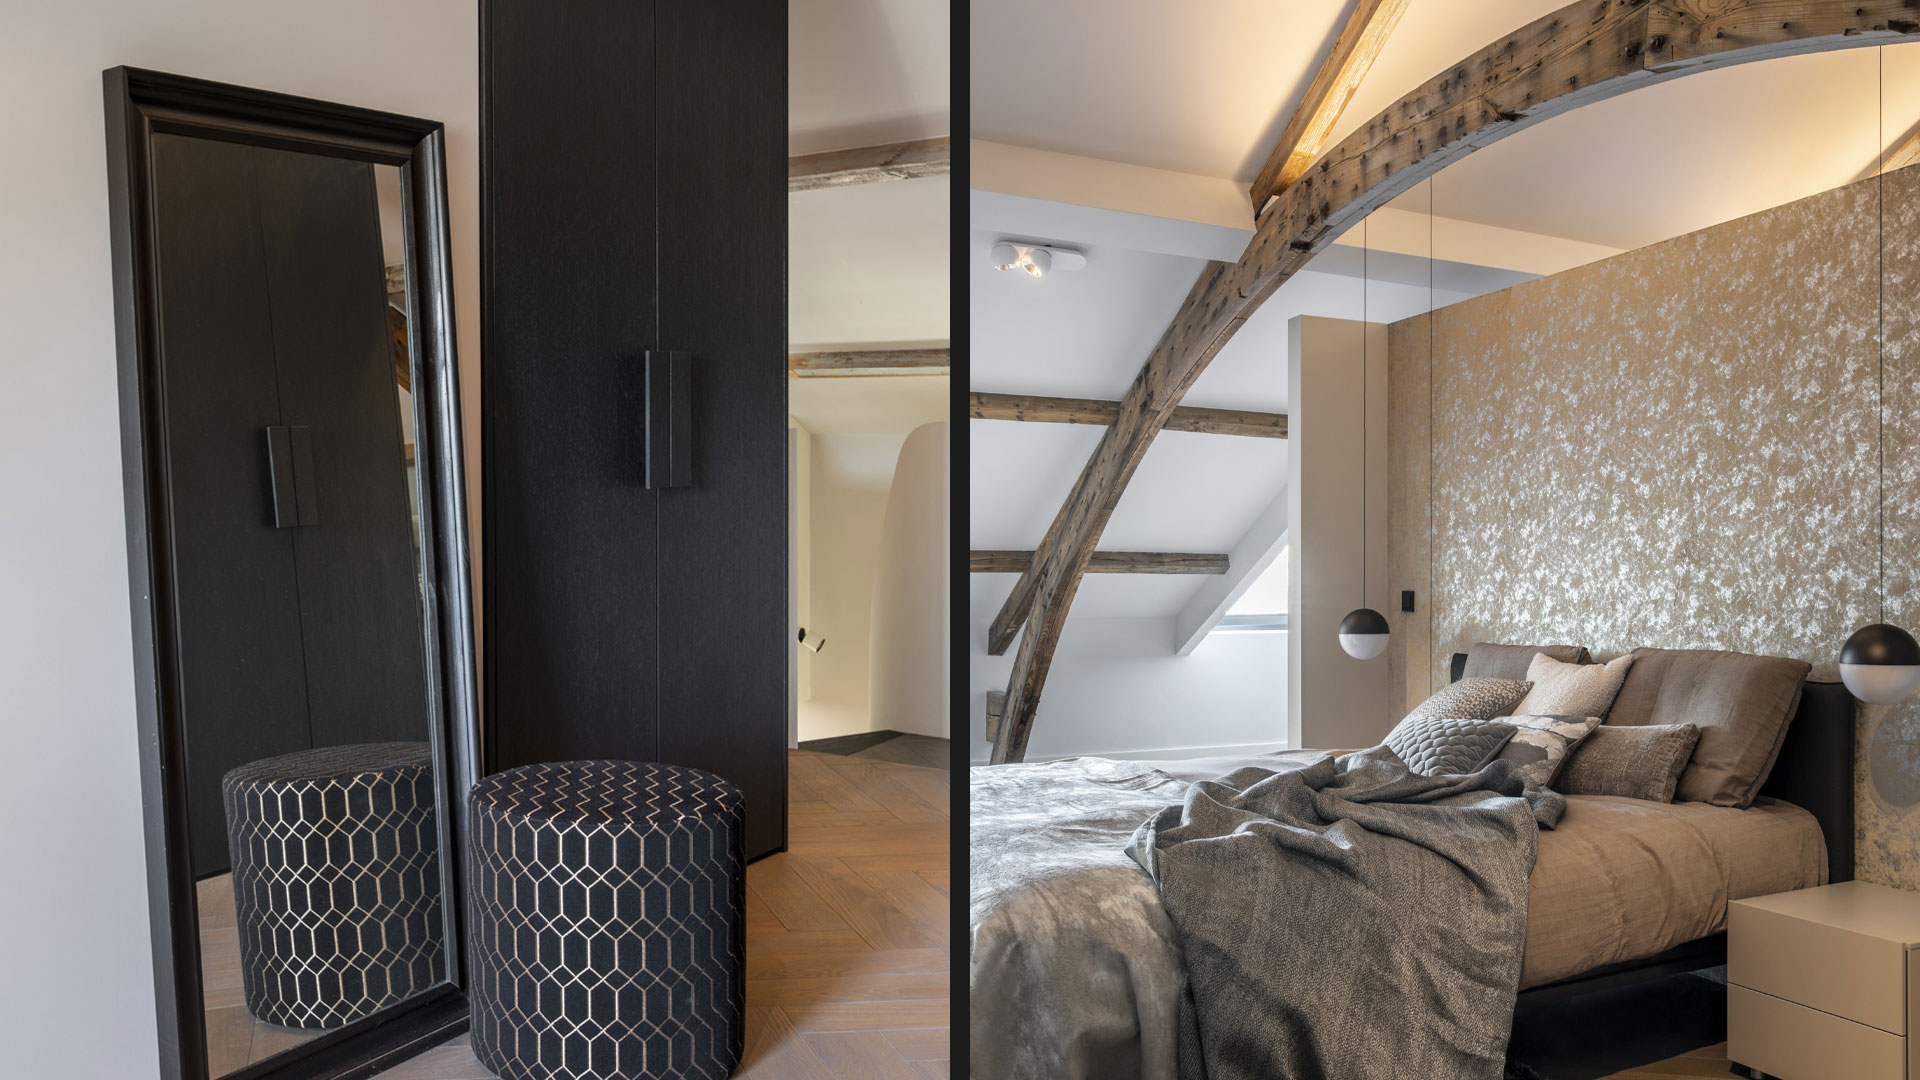 amsterdam bedroom inspiration